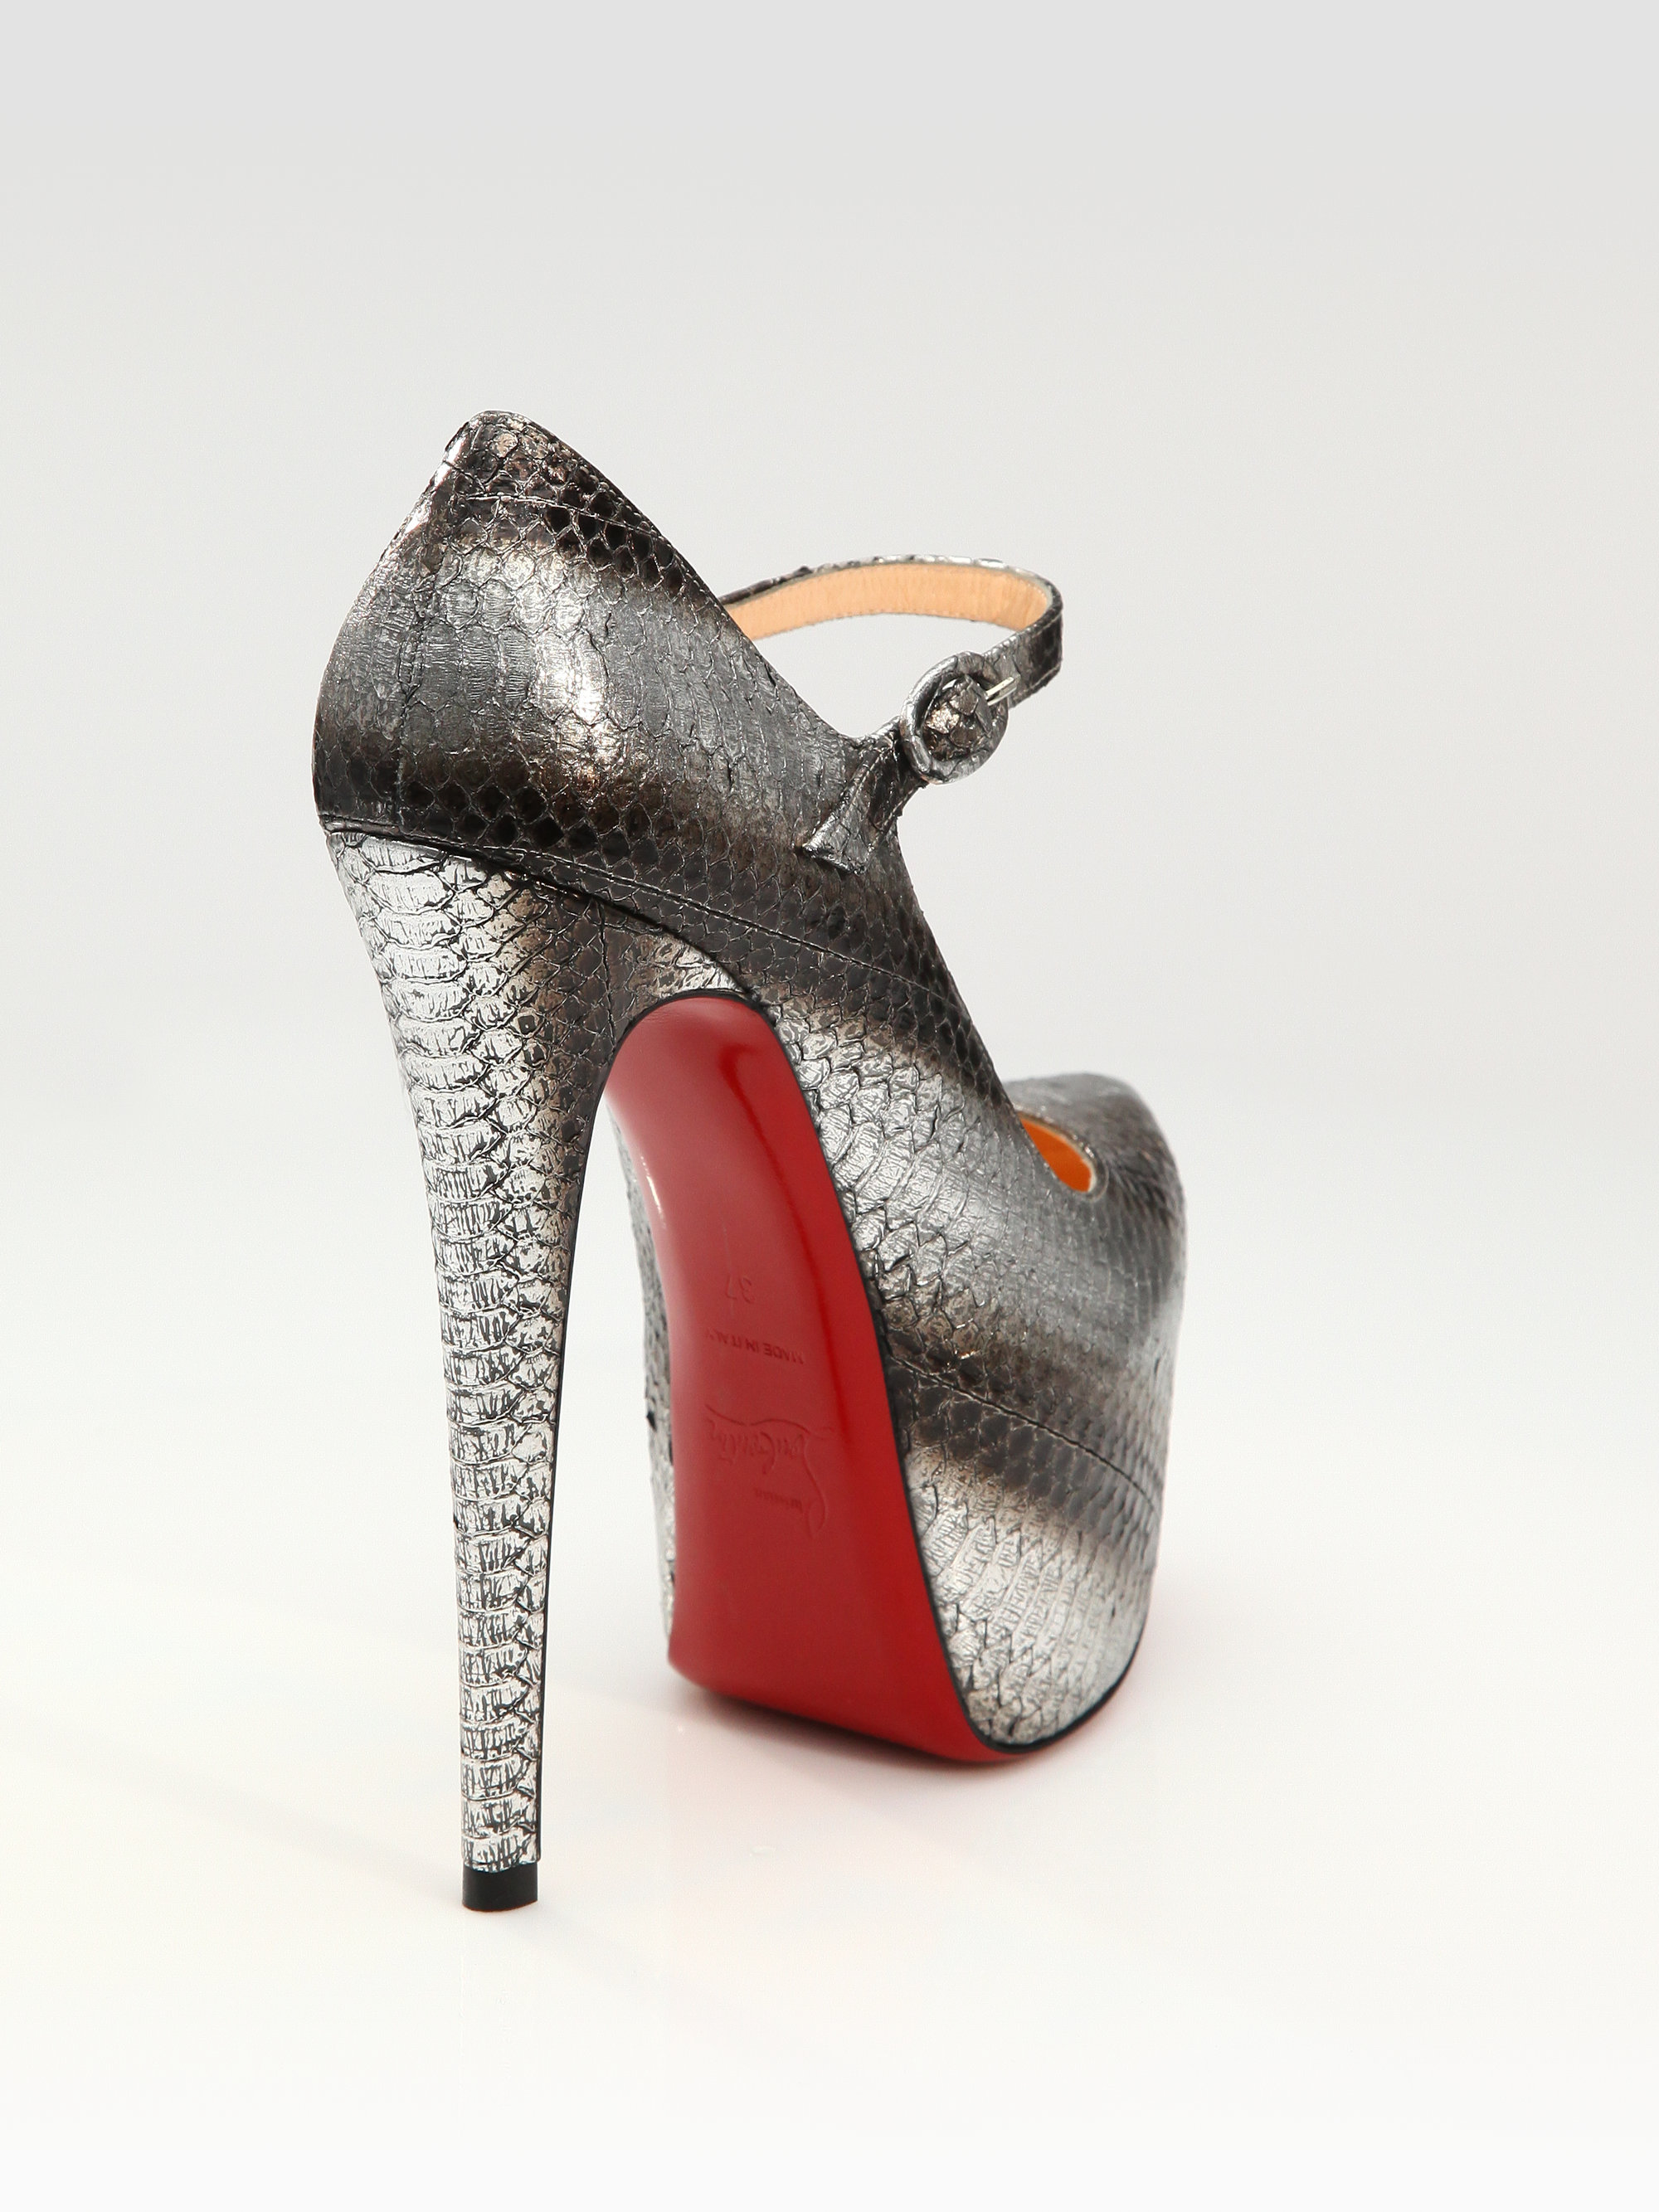 christian louboutin peep-toe pumps Silver metallic snakeskin | The ...